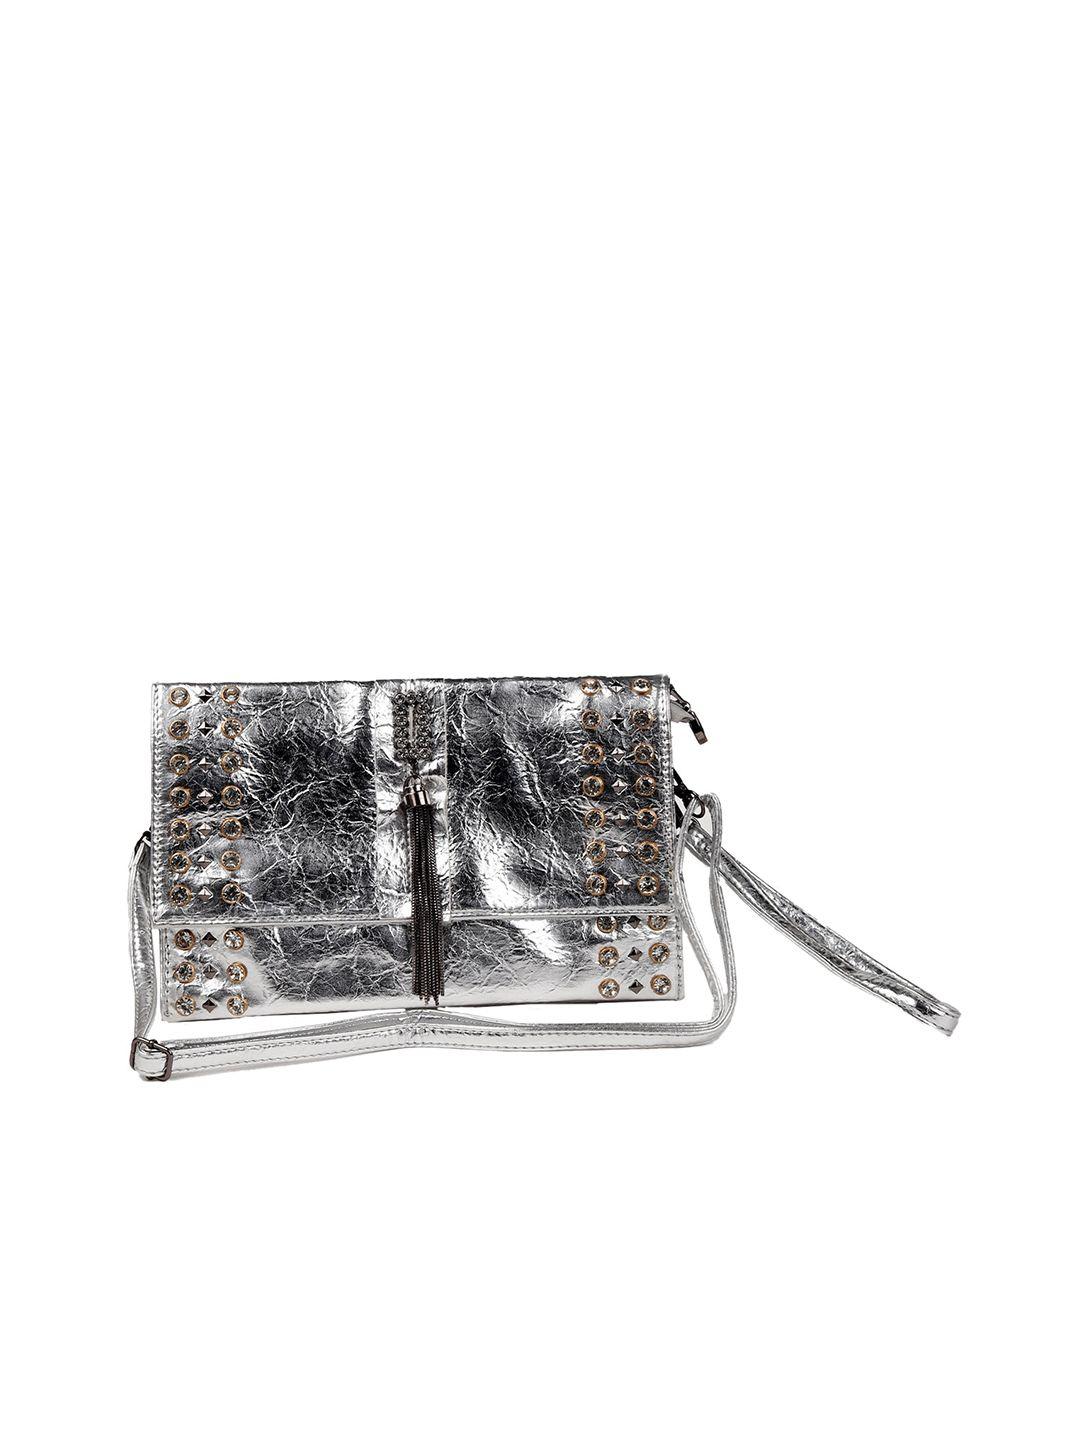 odette silver-toned purse clutch